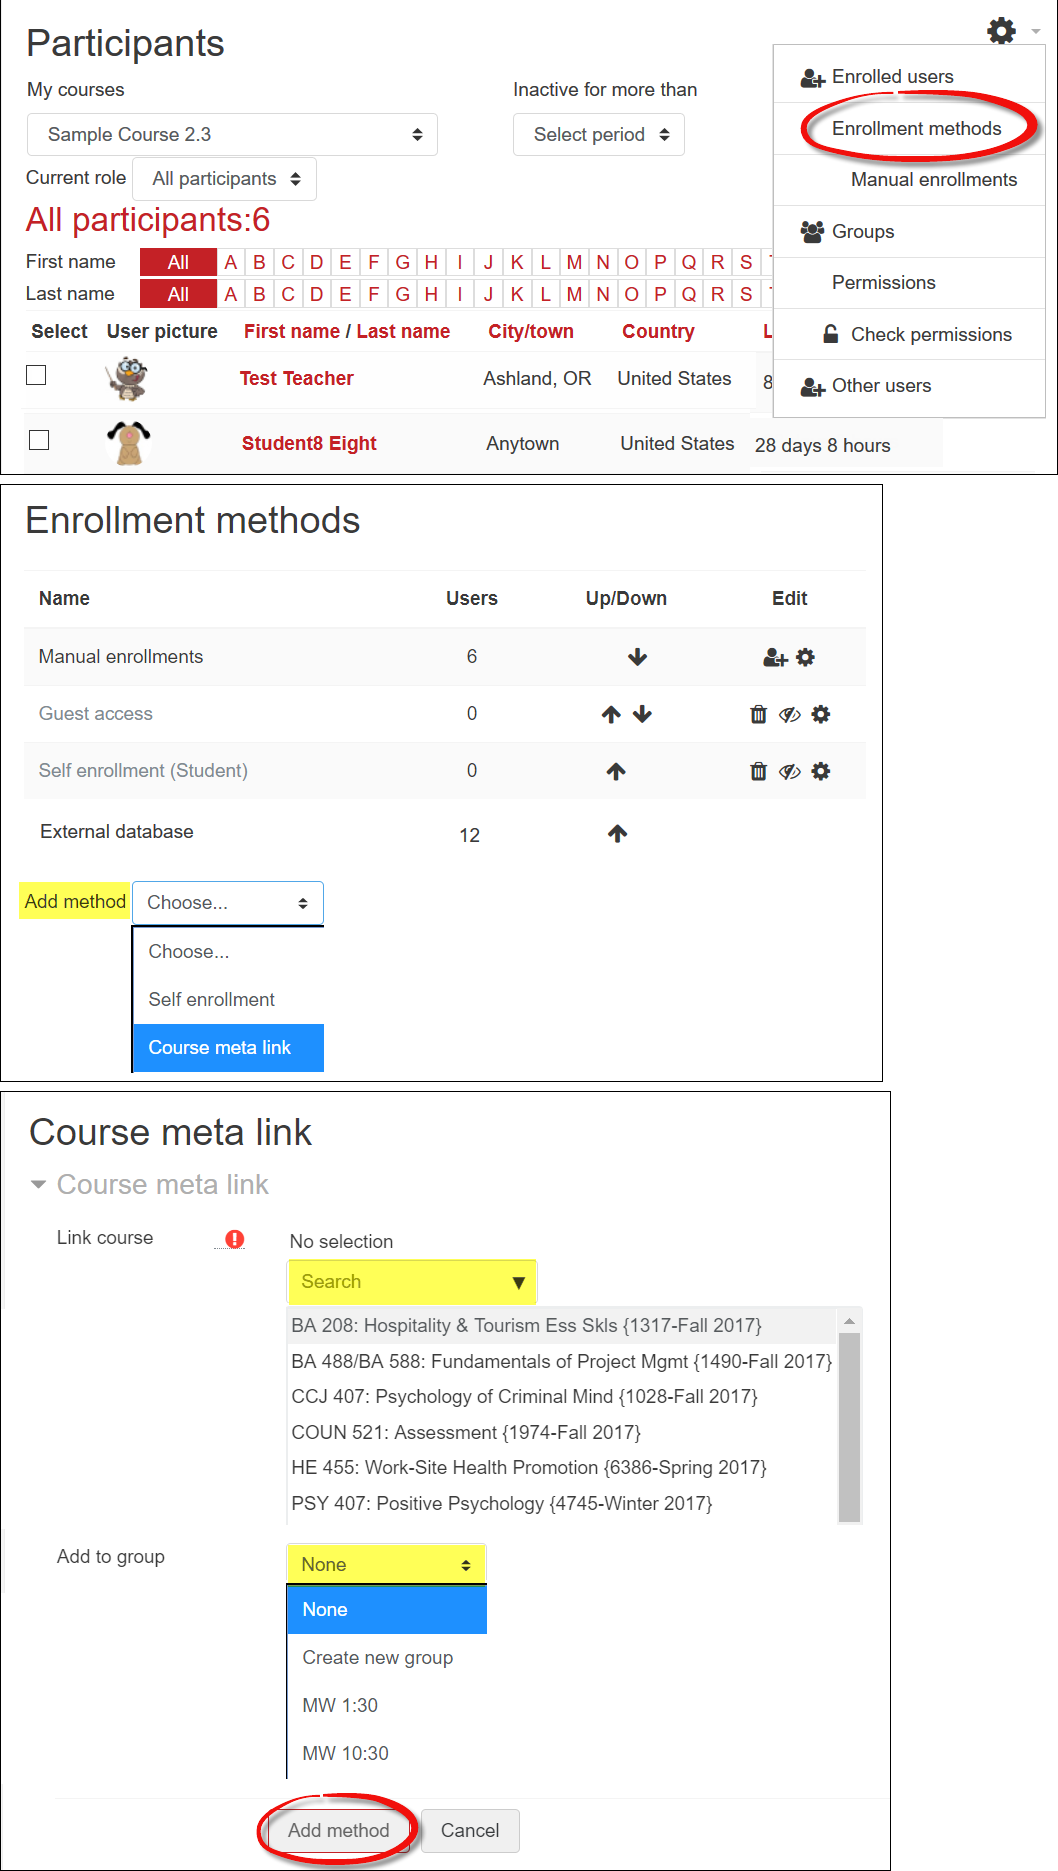 Screenshots of enrollment methods pages